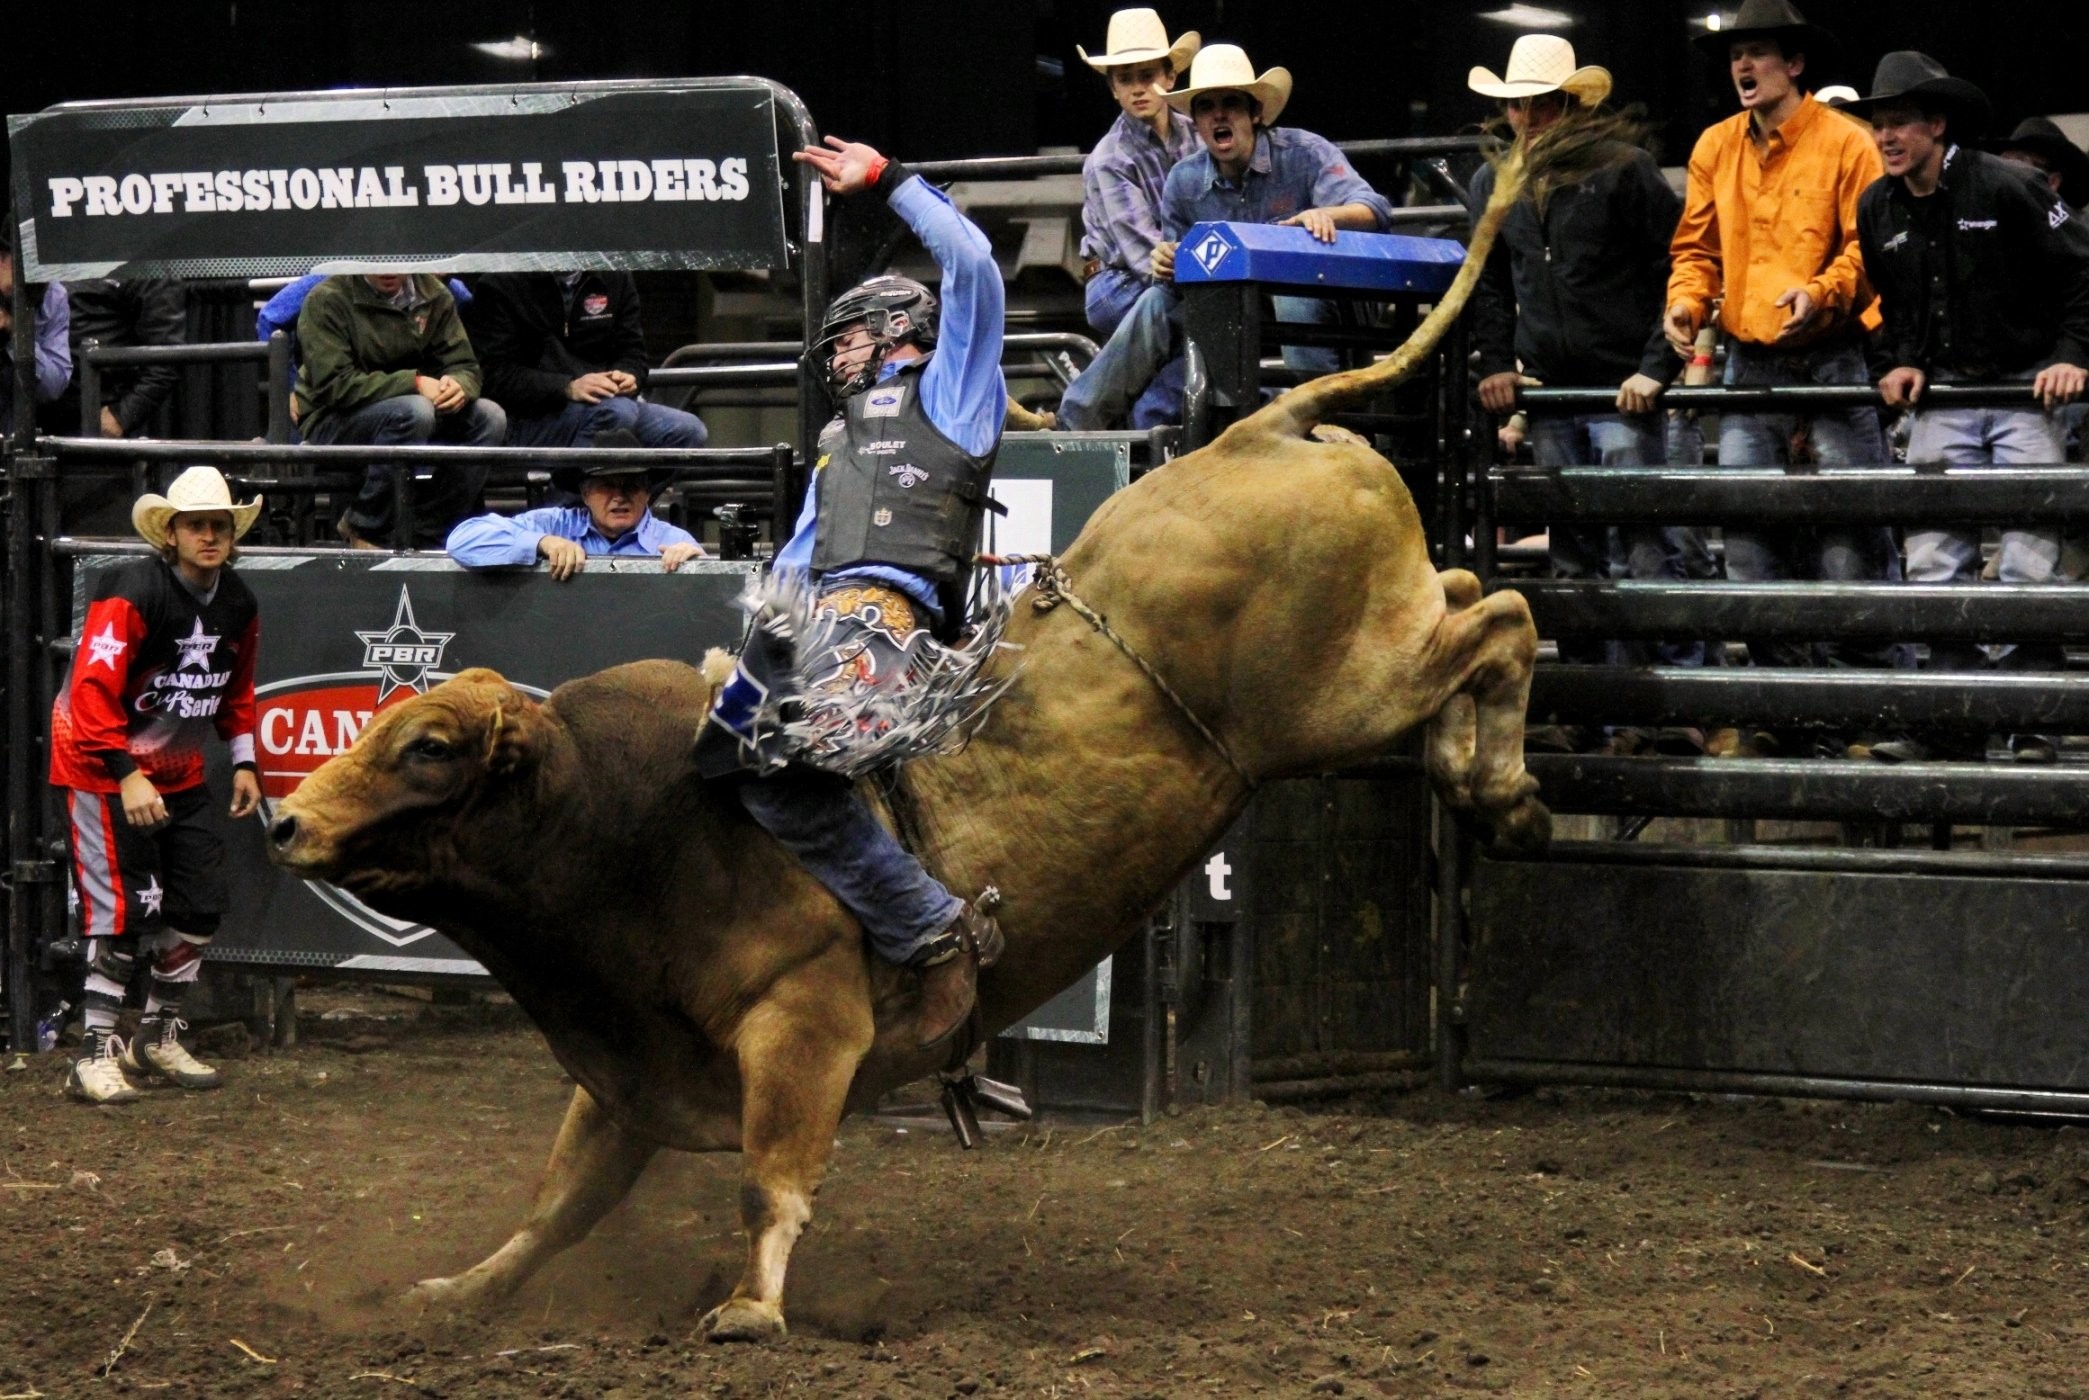 2089x1400 Bull riding bullrider rodeo western cowboy extreme cow 9 